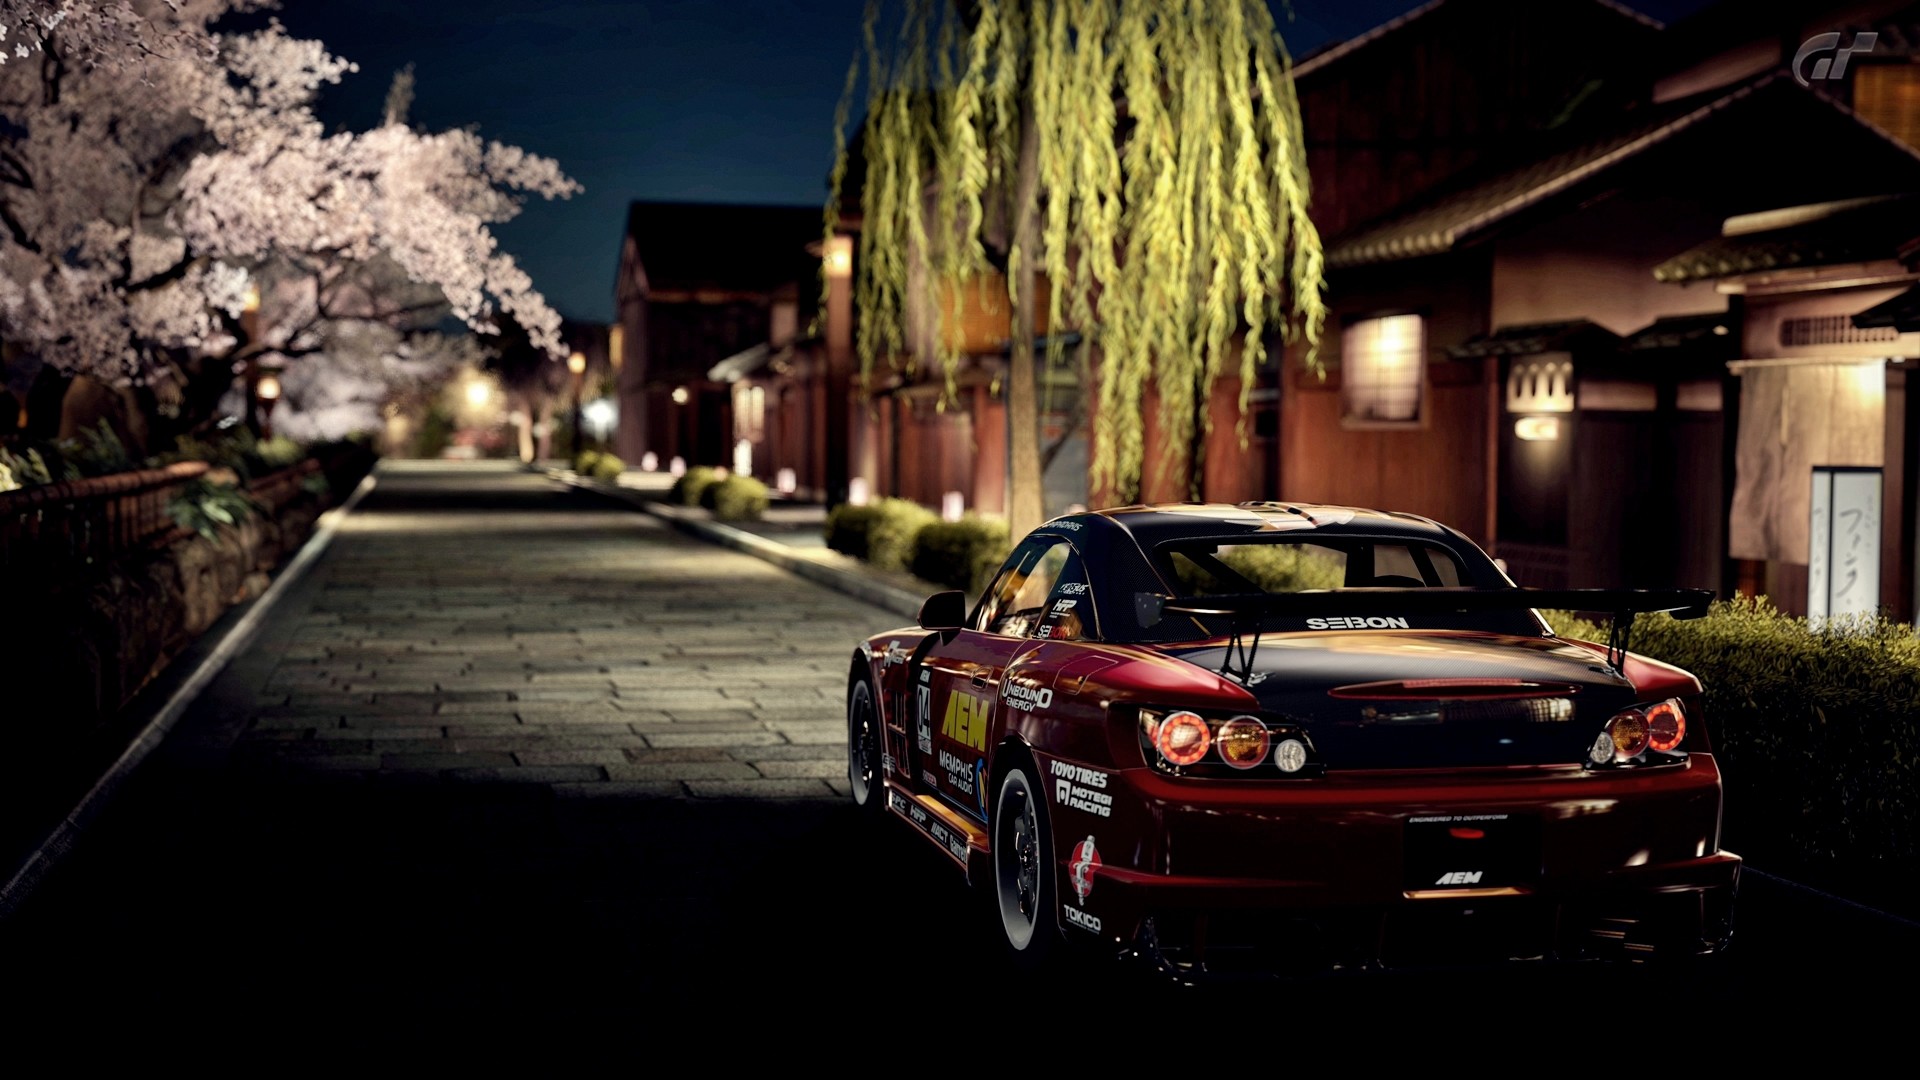 Dark Night Honda Cars Vehicles Honda S00 Gt5 Automobile Wallpapers Hd Desktop And Mobile Backgrounds